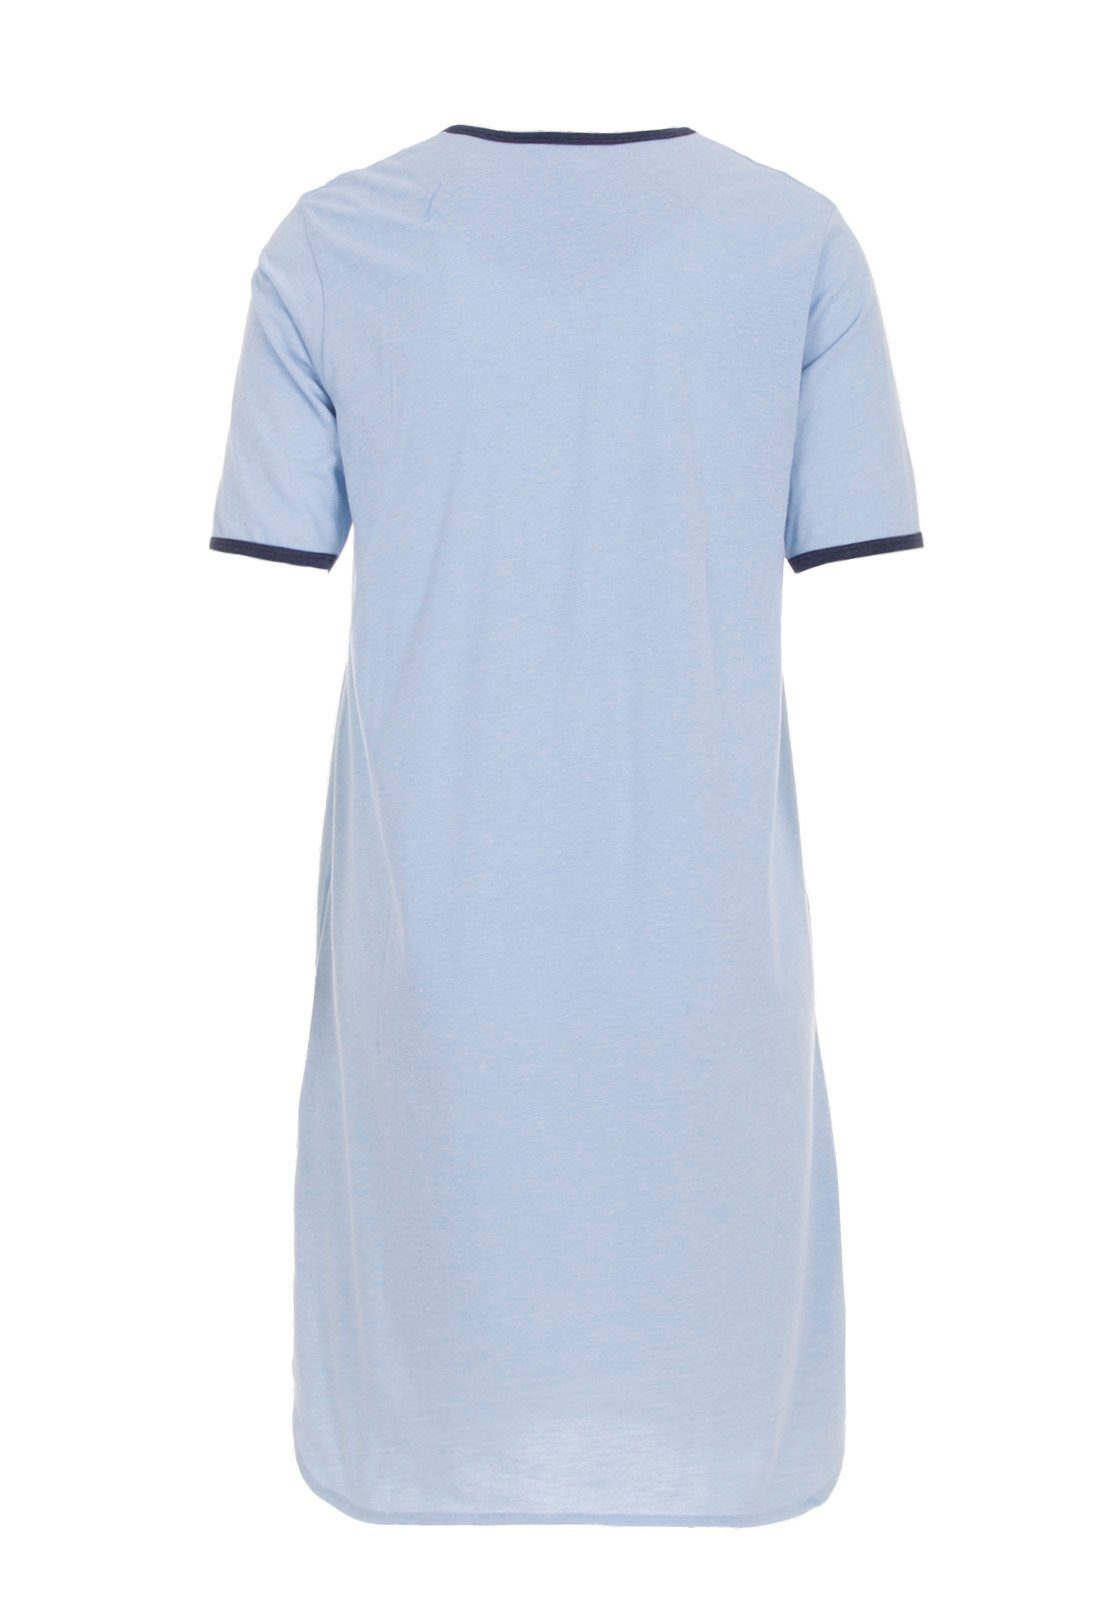 Henry Terre Nachthemd Nachthemd Kurzarm - hellblau Uni